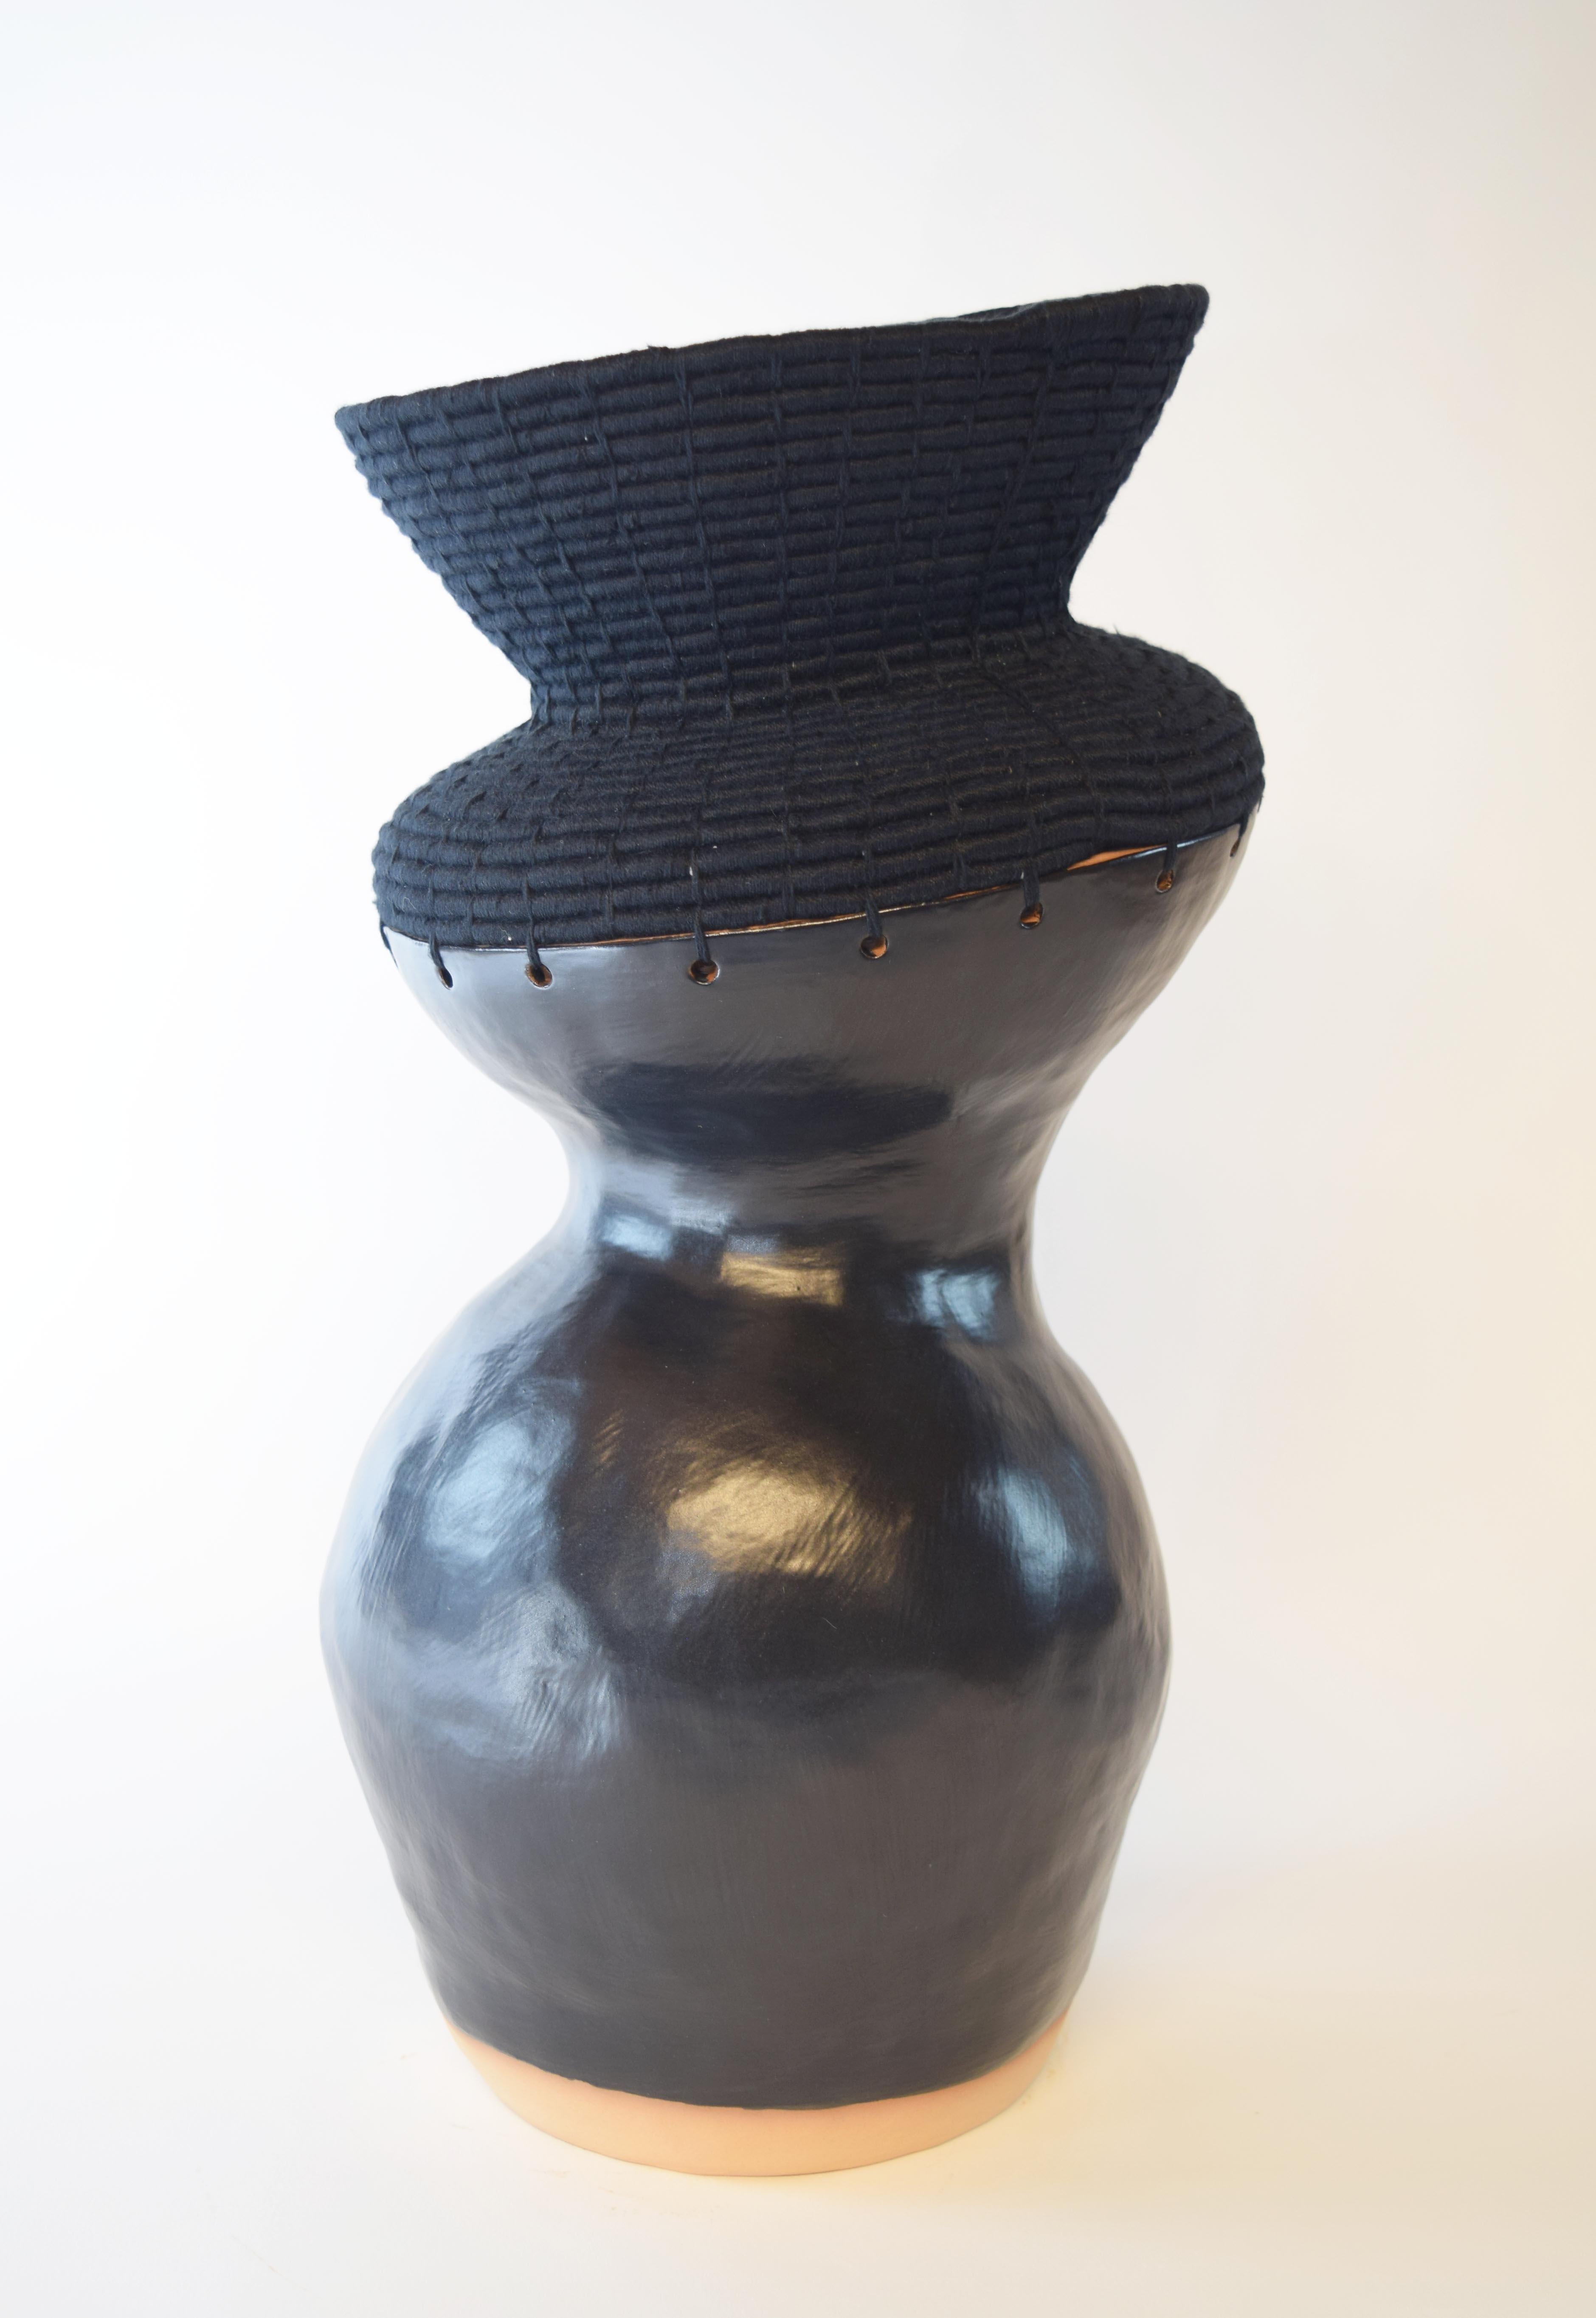 Organic Modern One of a Kind Ceramic & Woven Fiber Vessel #761, Satin Black Glaze, Black Cotton For Sale